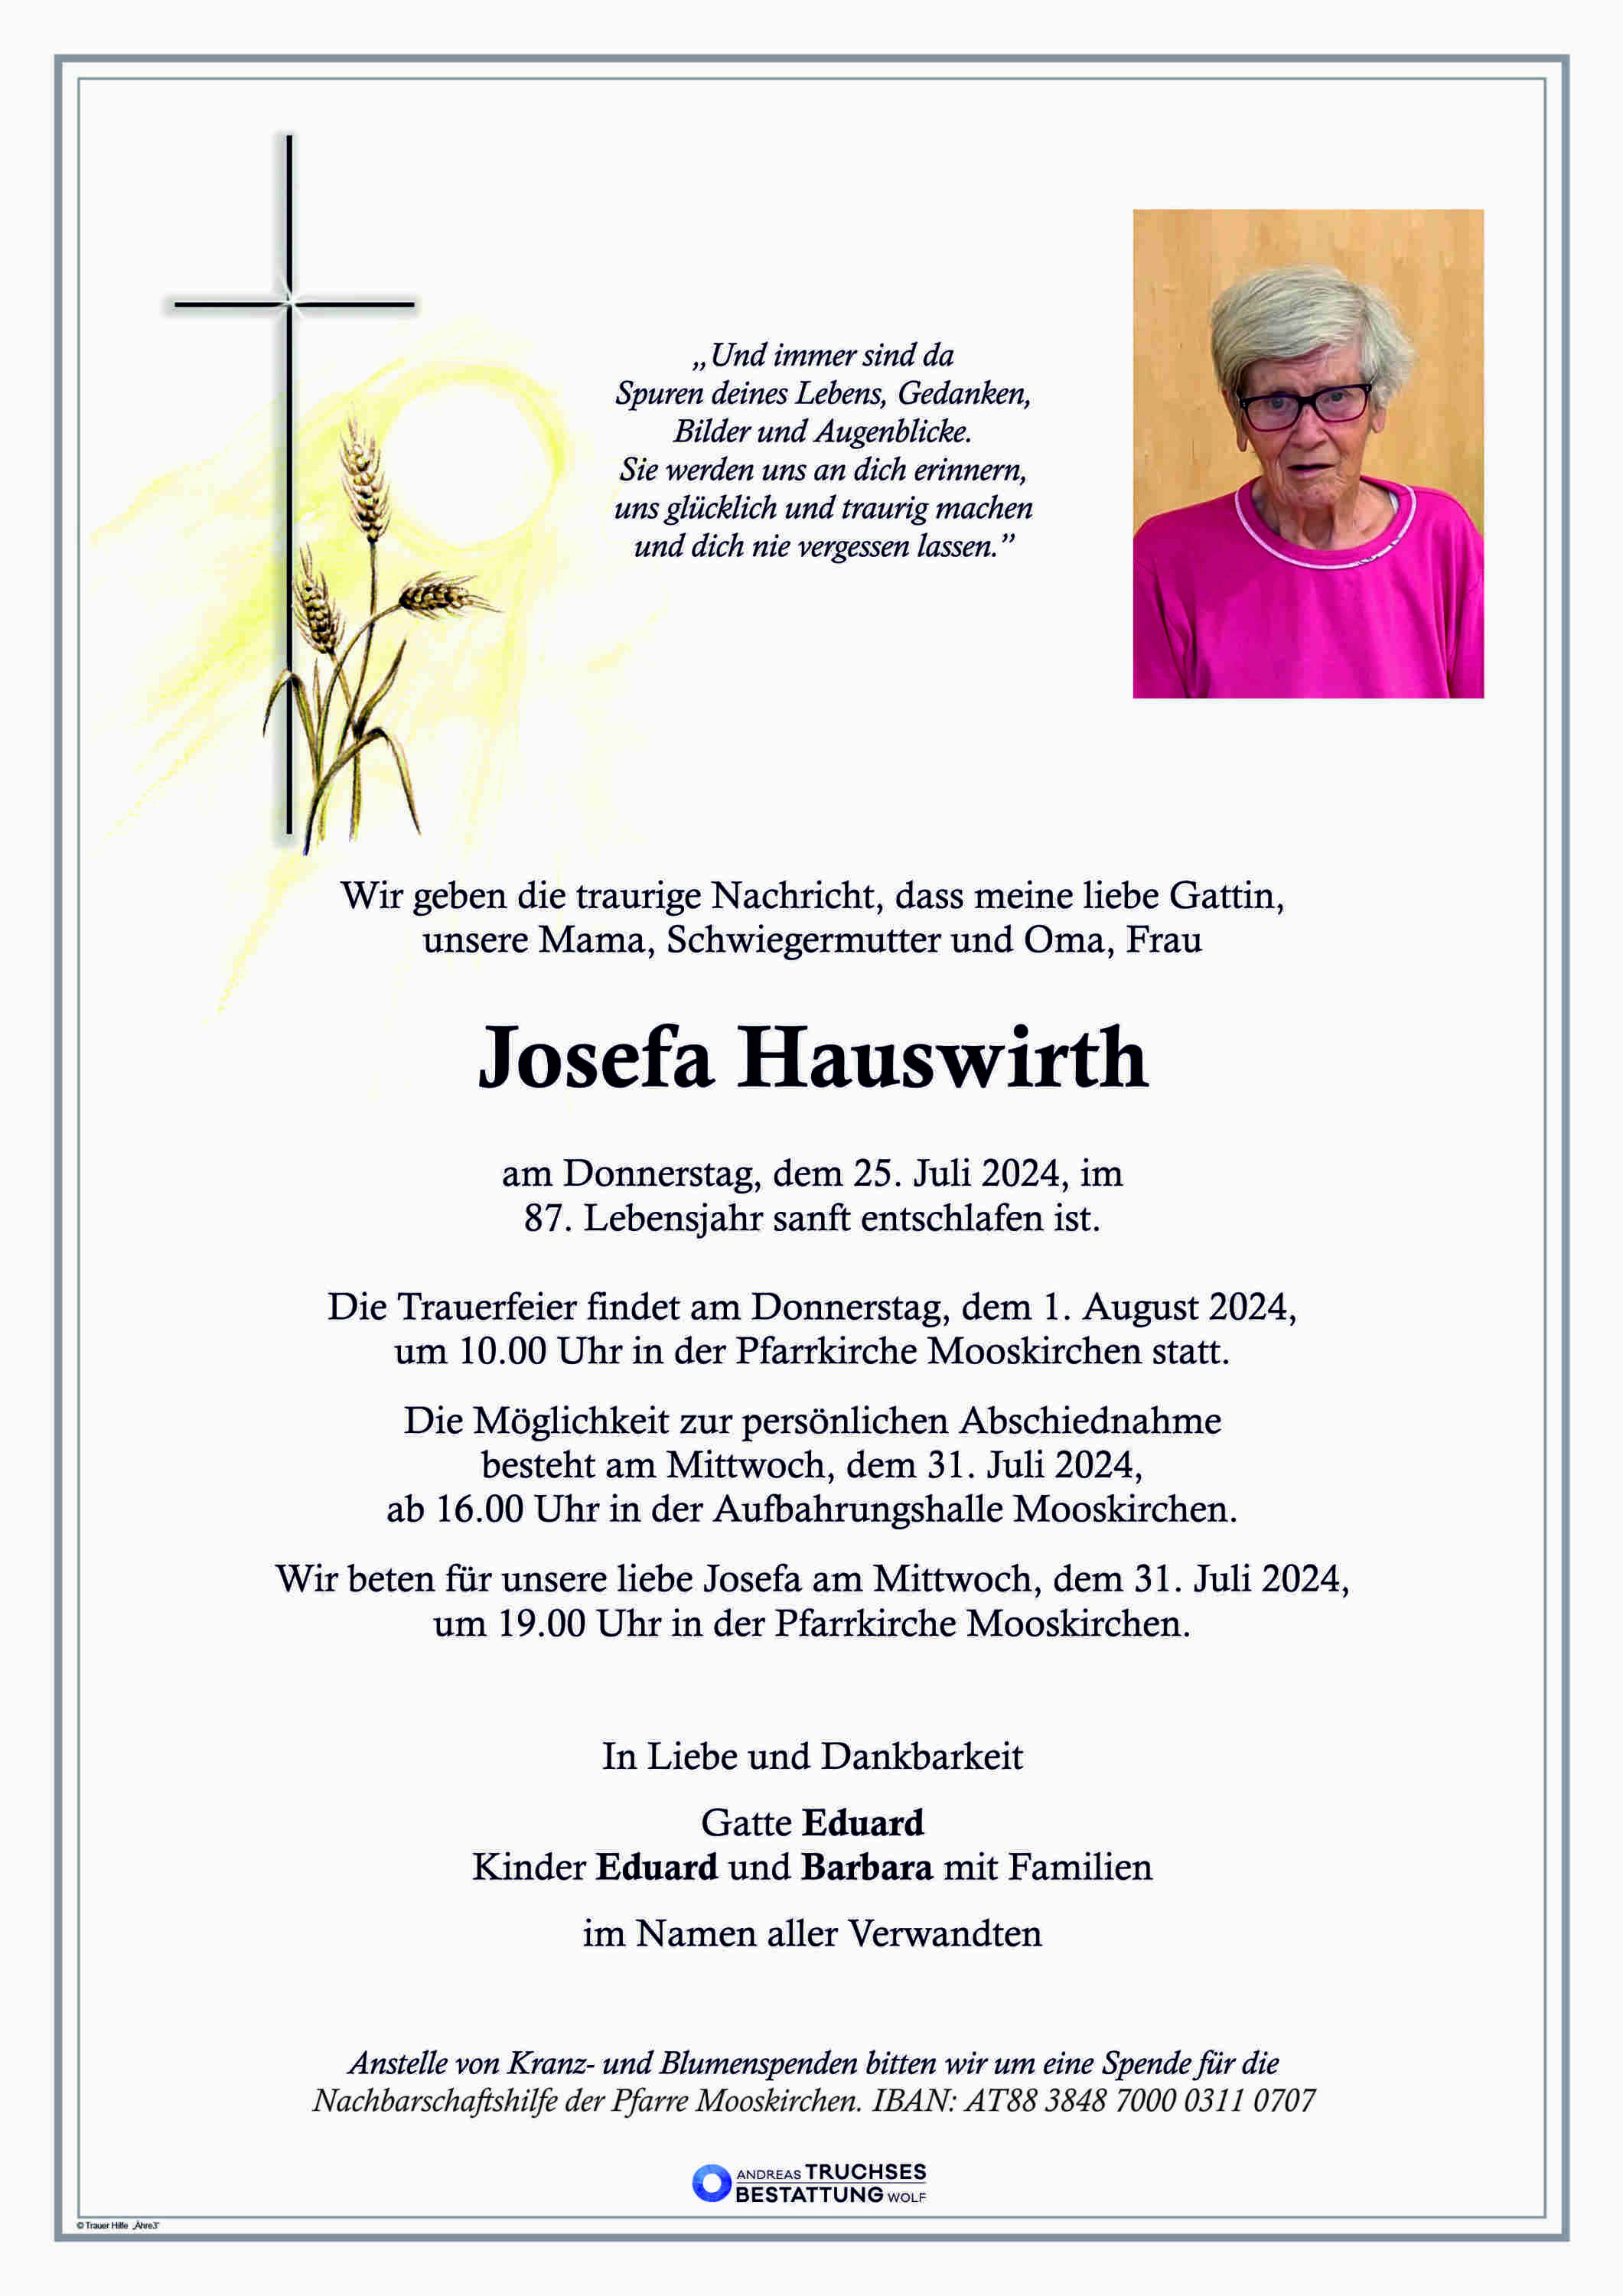 Josefa Hauswirth